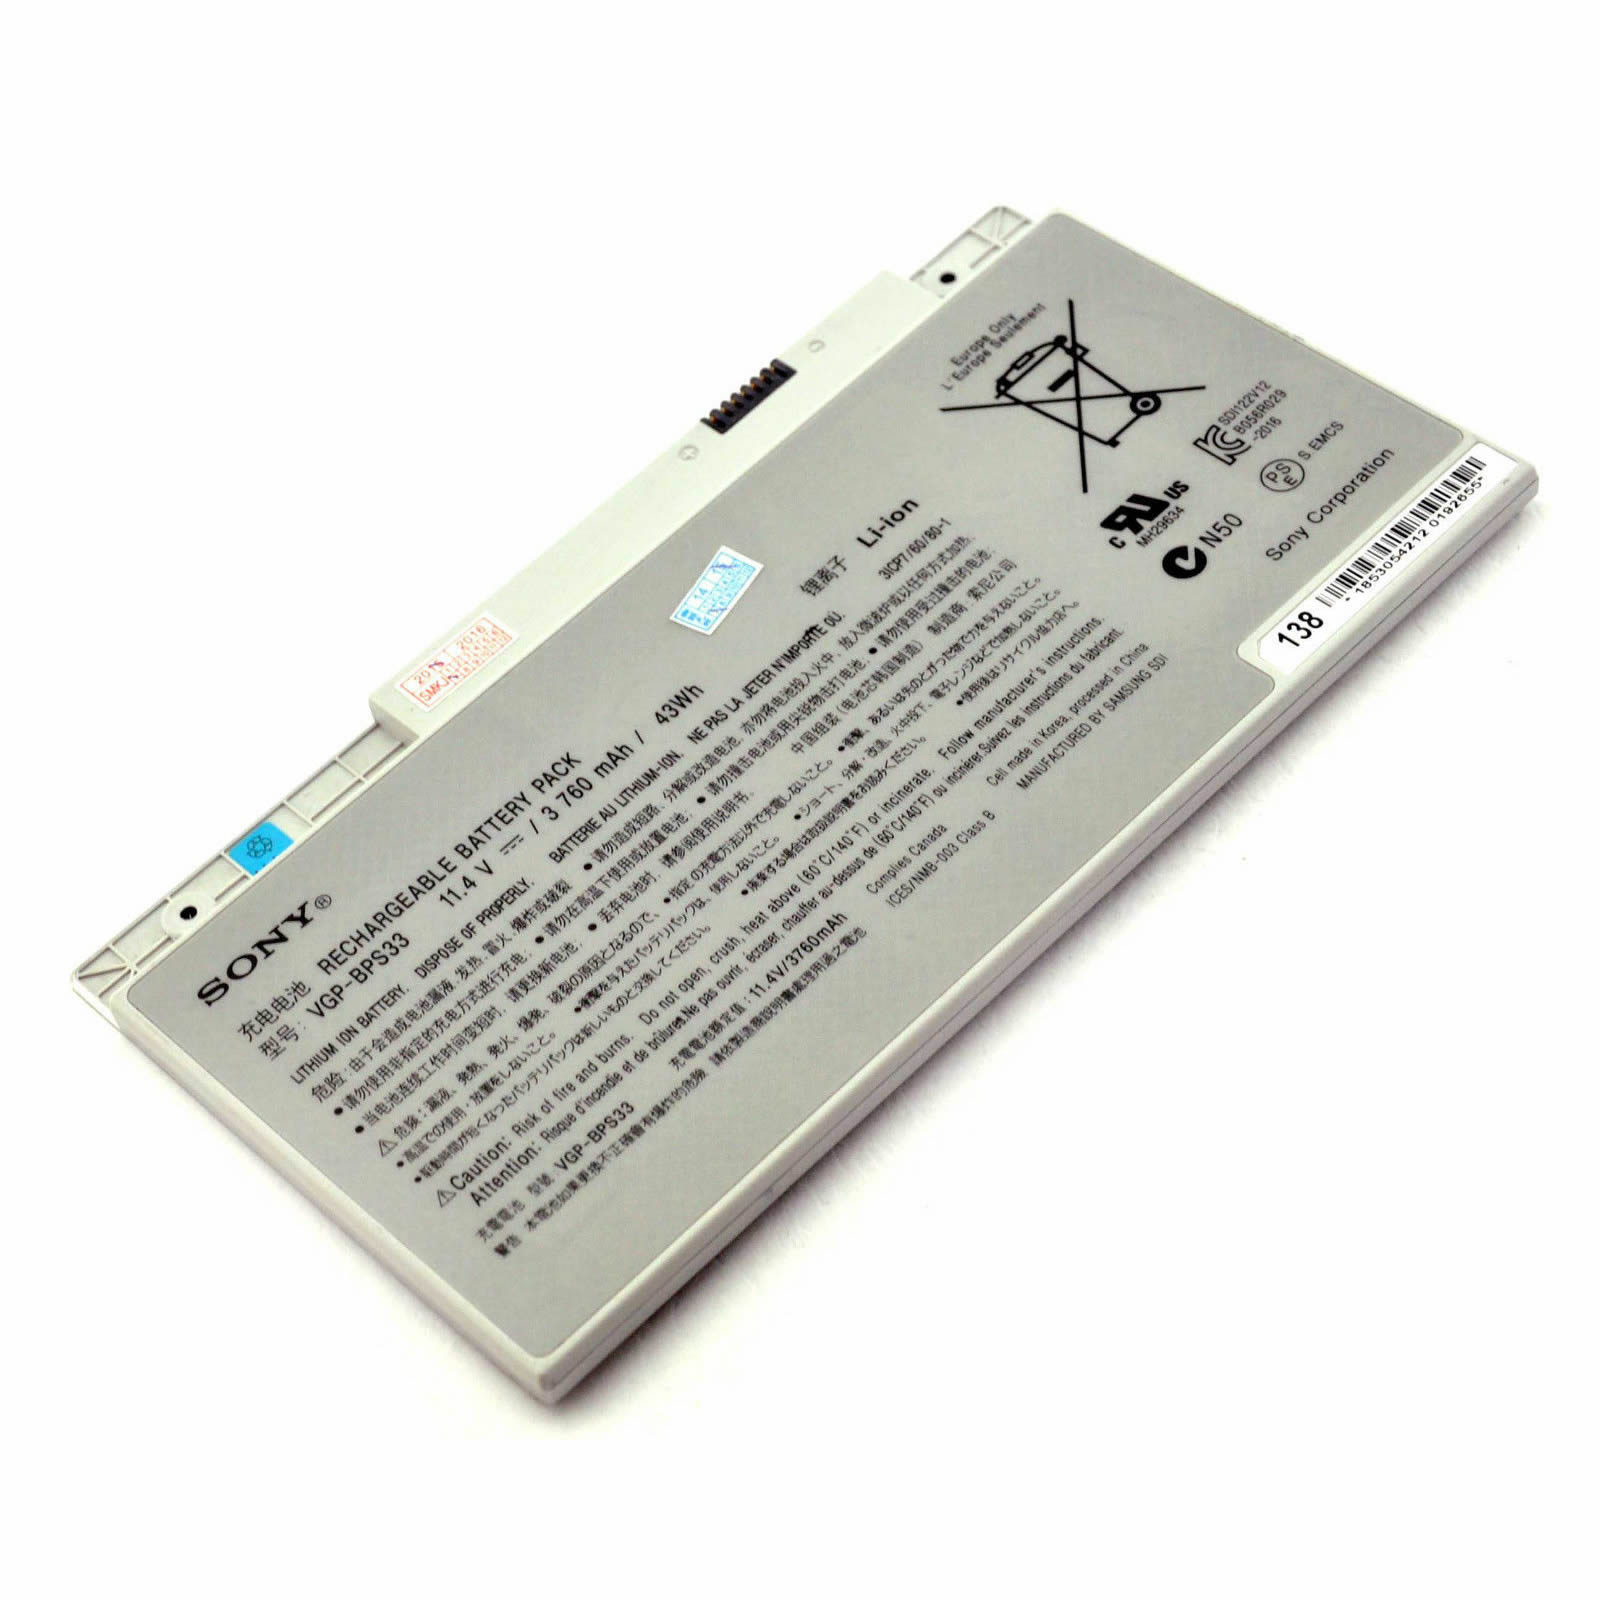 sony vaio svt-14 touchscreen ultrabooks laptop battery